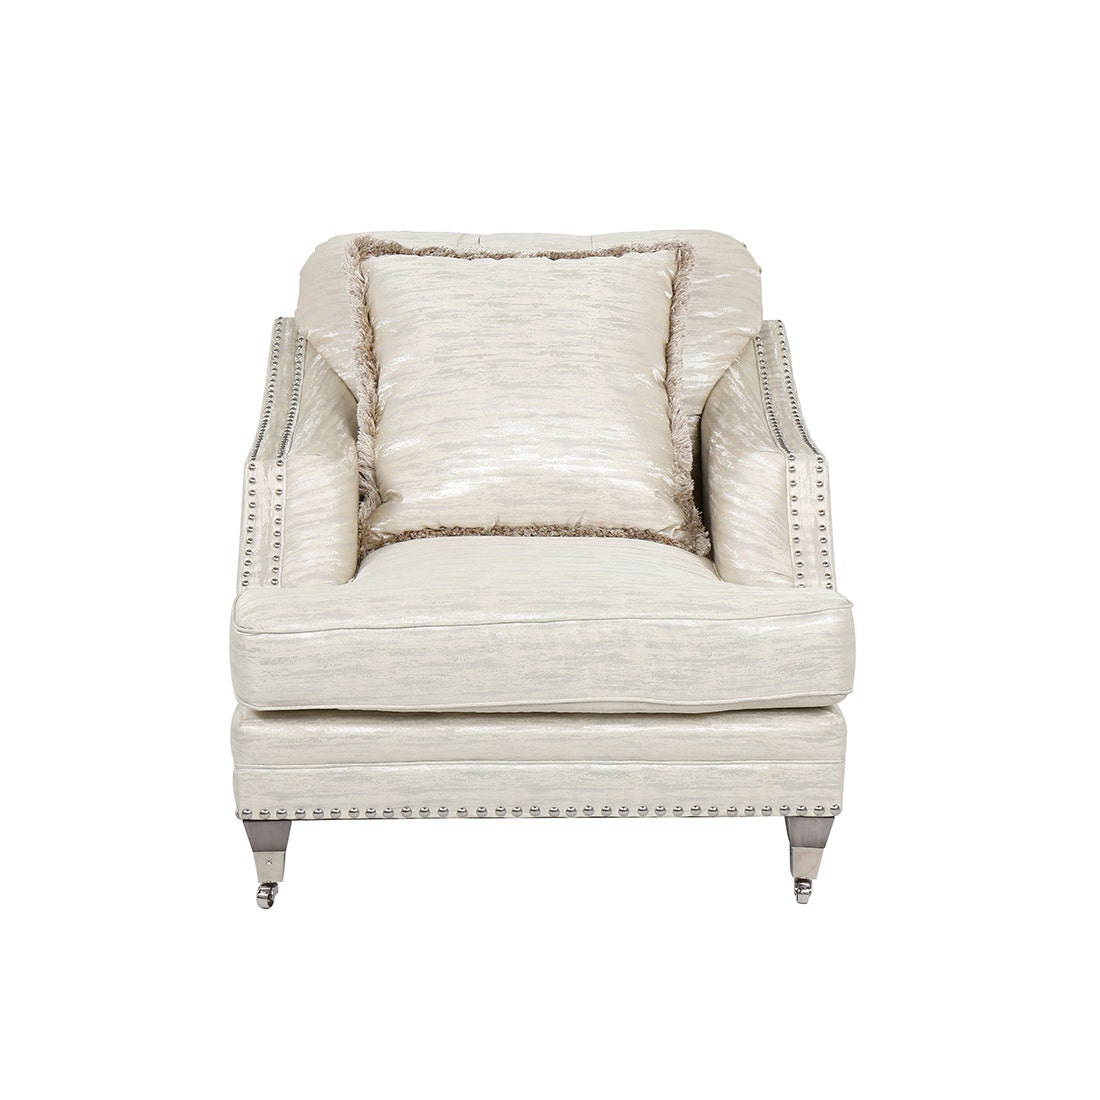 19155782-hanalo-furniture-sofa-recliner-sofas-01